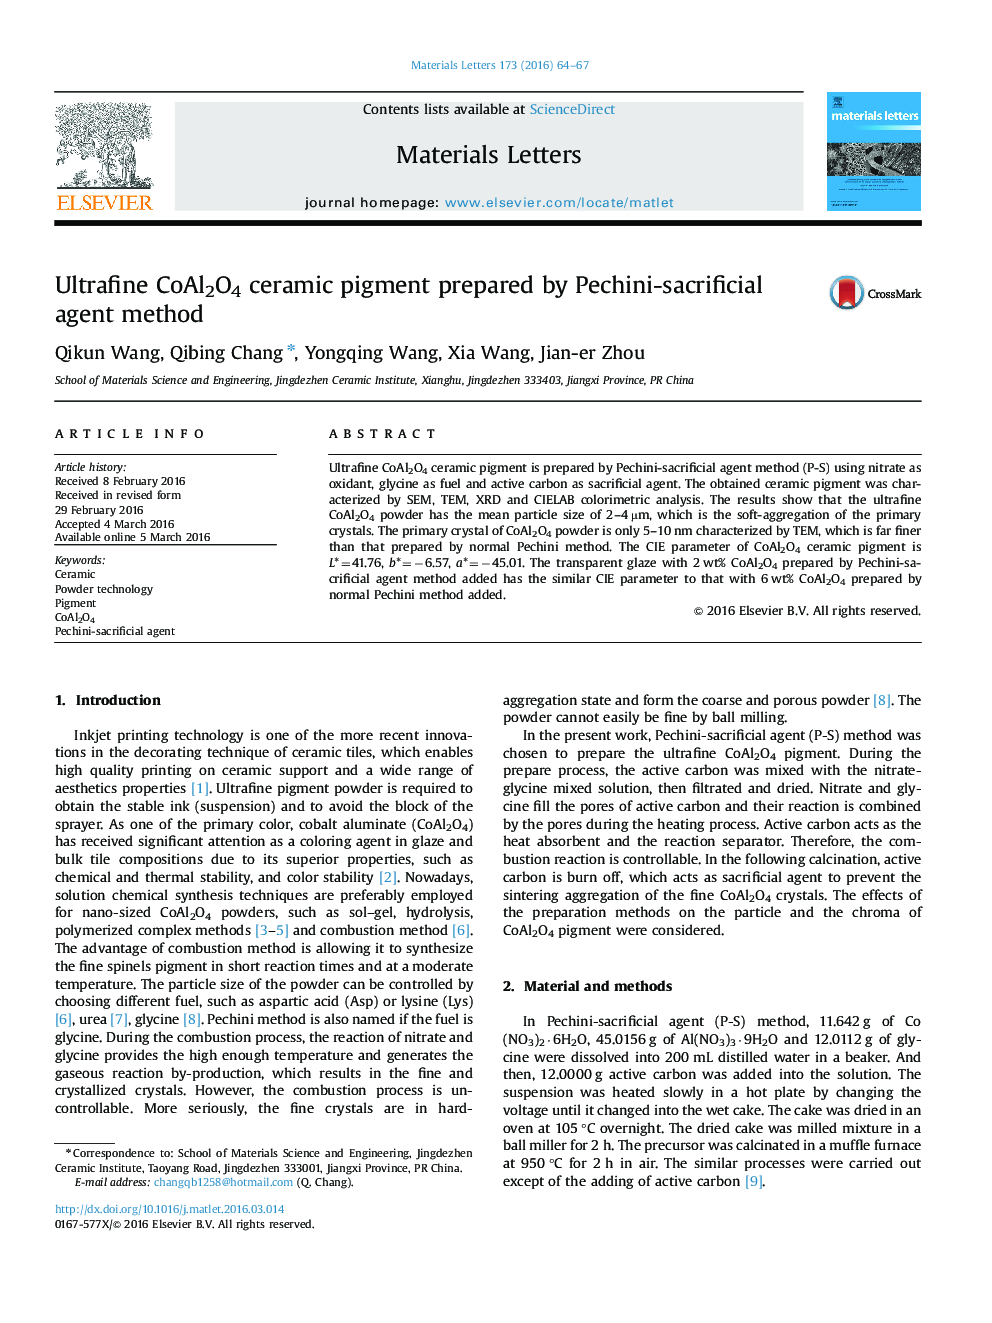 Ultrafine CoAl2O4 ceramic pigment prepared by Pechini-sacrificial agent method